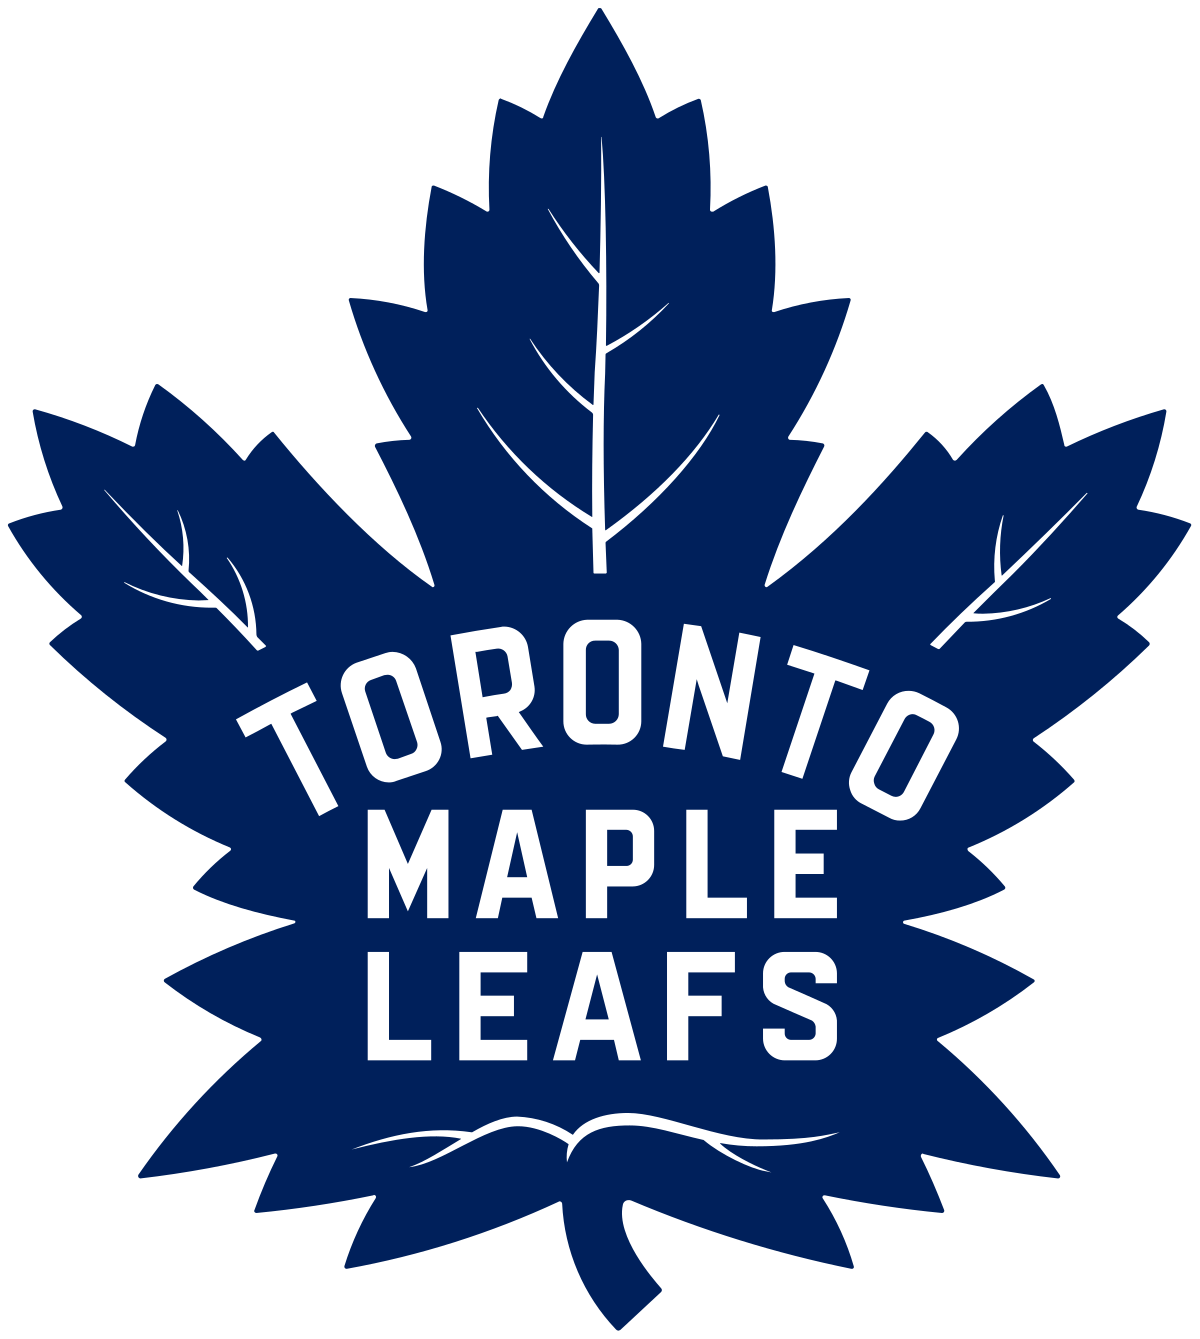 Old Maple Leaf Logo - Toronto Maple Leafs